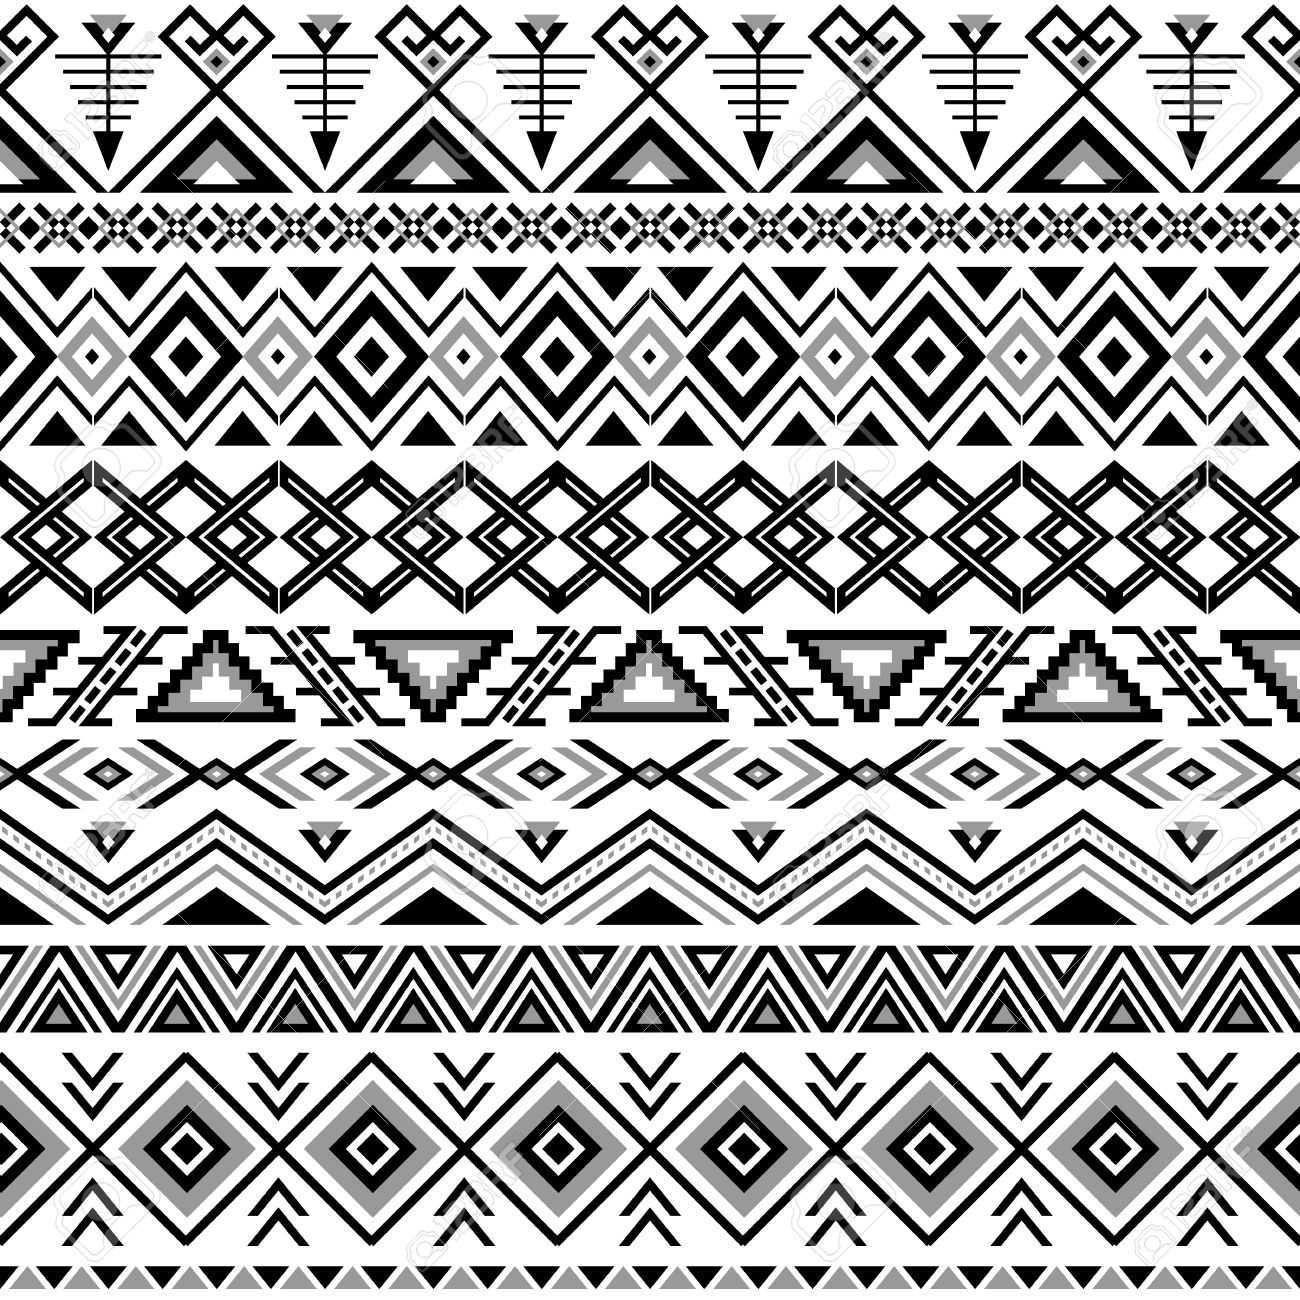 Aztec Print Laptop Wallpapers - Top Free Aztec Print Laptop Backgrounds ...